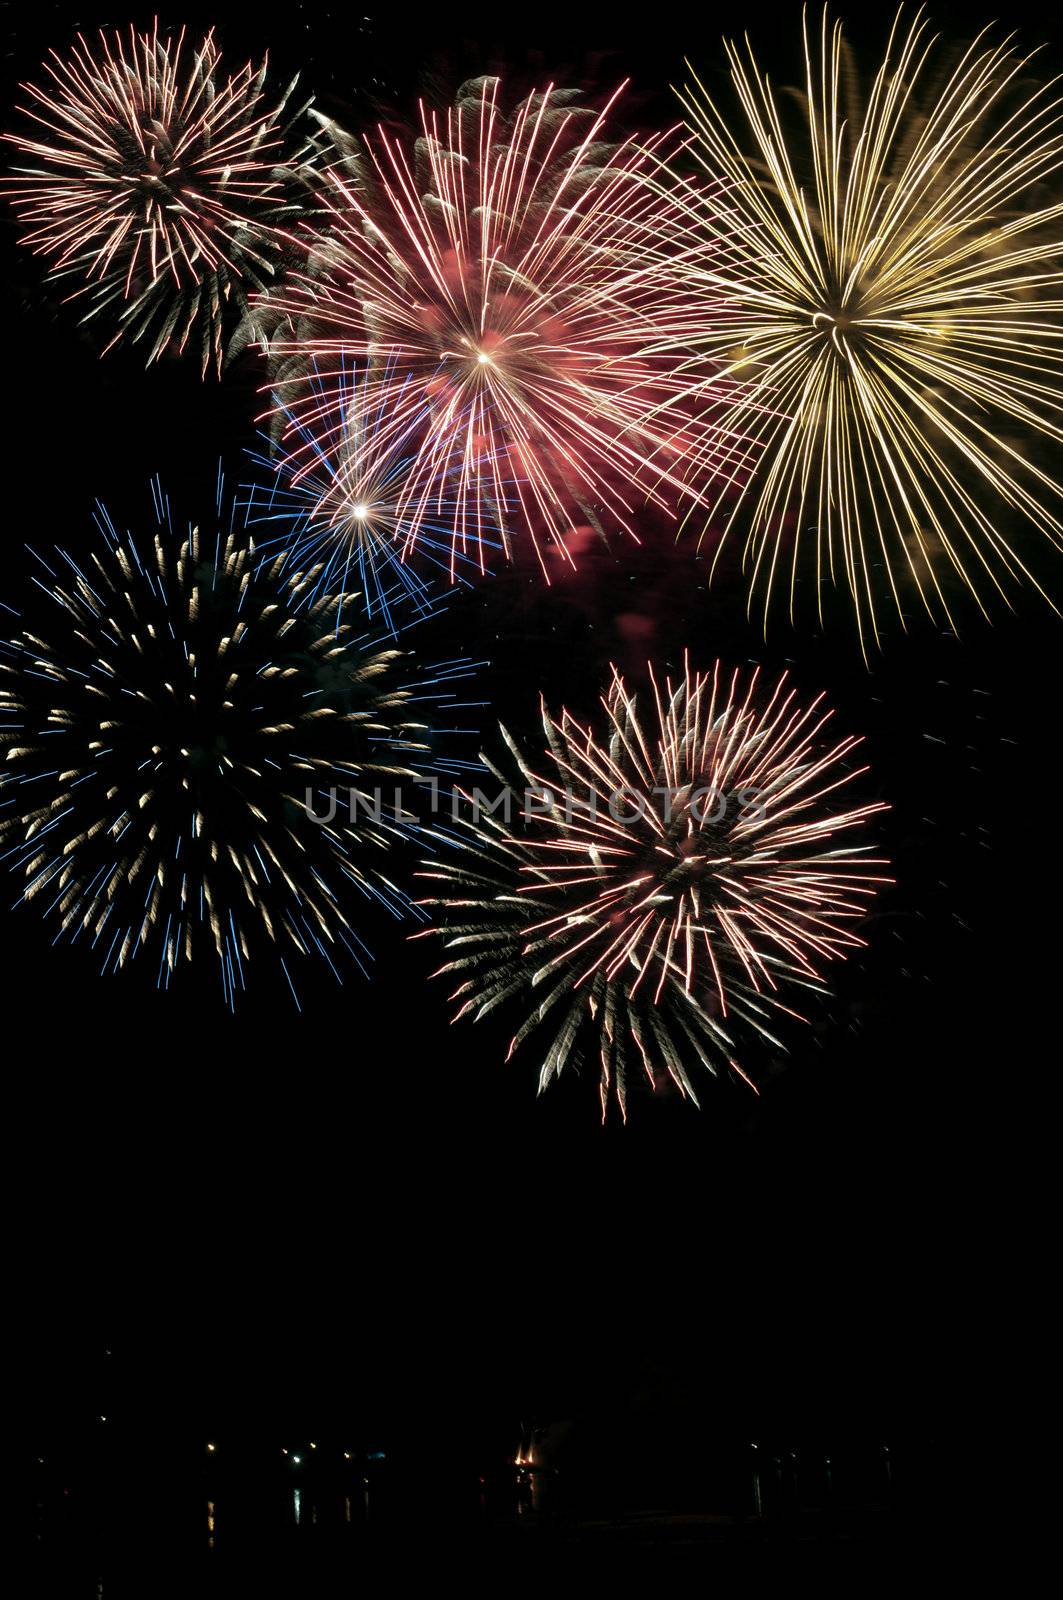 Fireworks display on Canada Day celebration